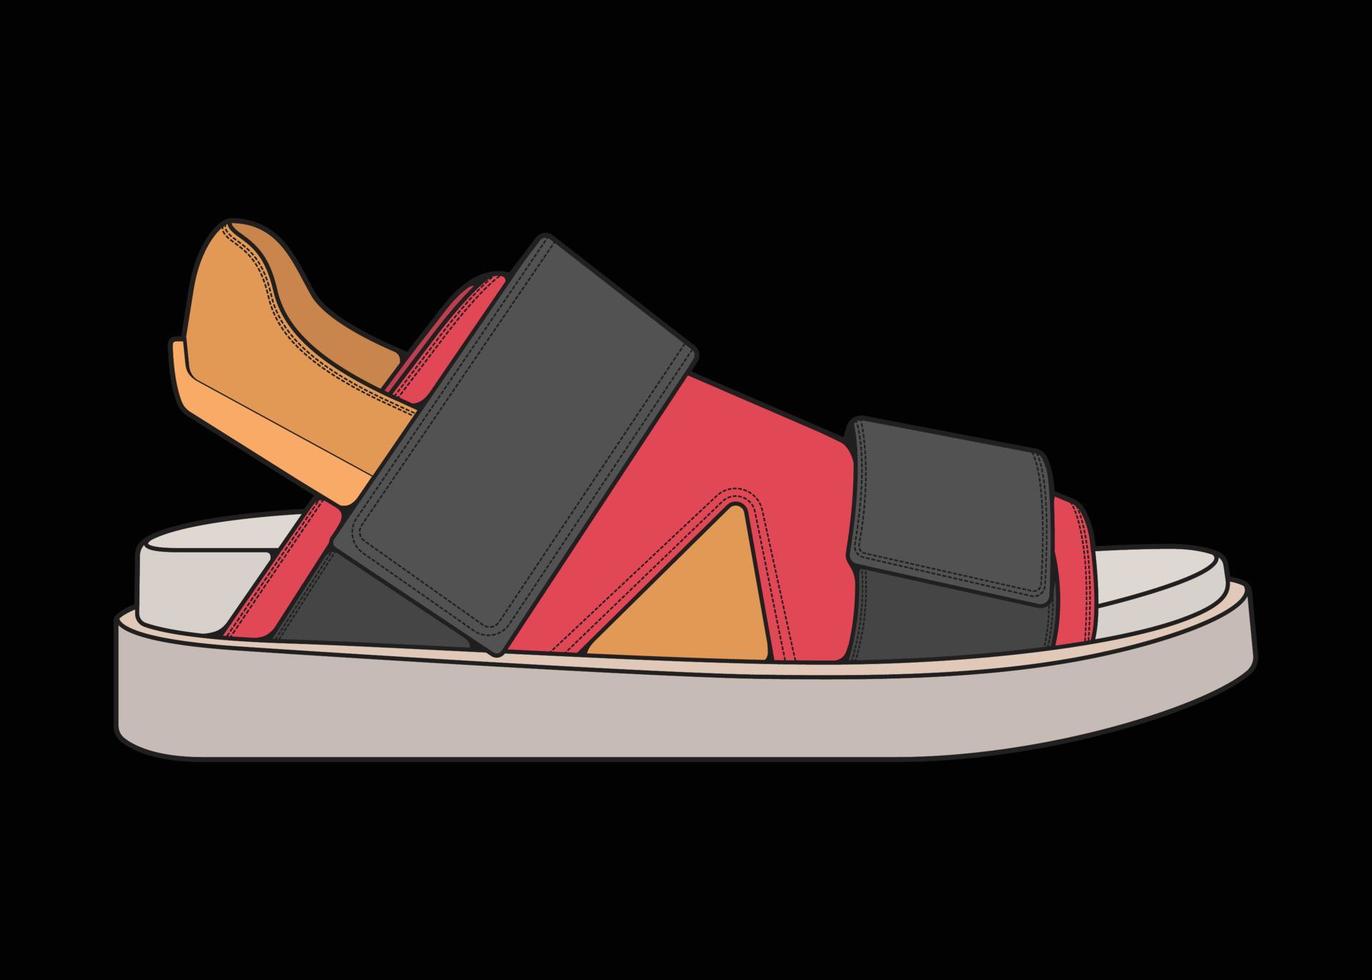 rem sandaler flerfärgad ritning vektor, rem sandaler i en flerfärgad stil, vektor illustration. med svart bakgrund